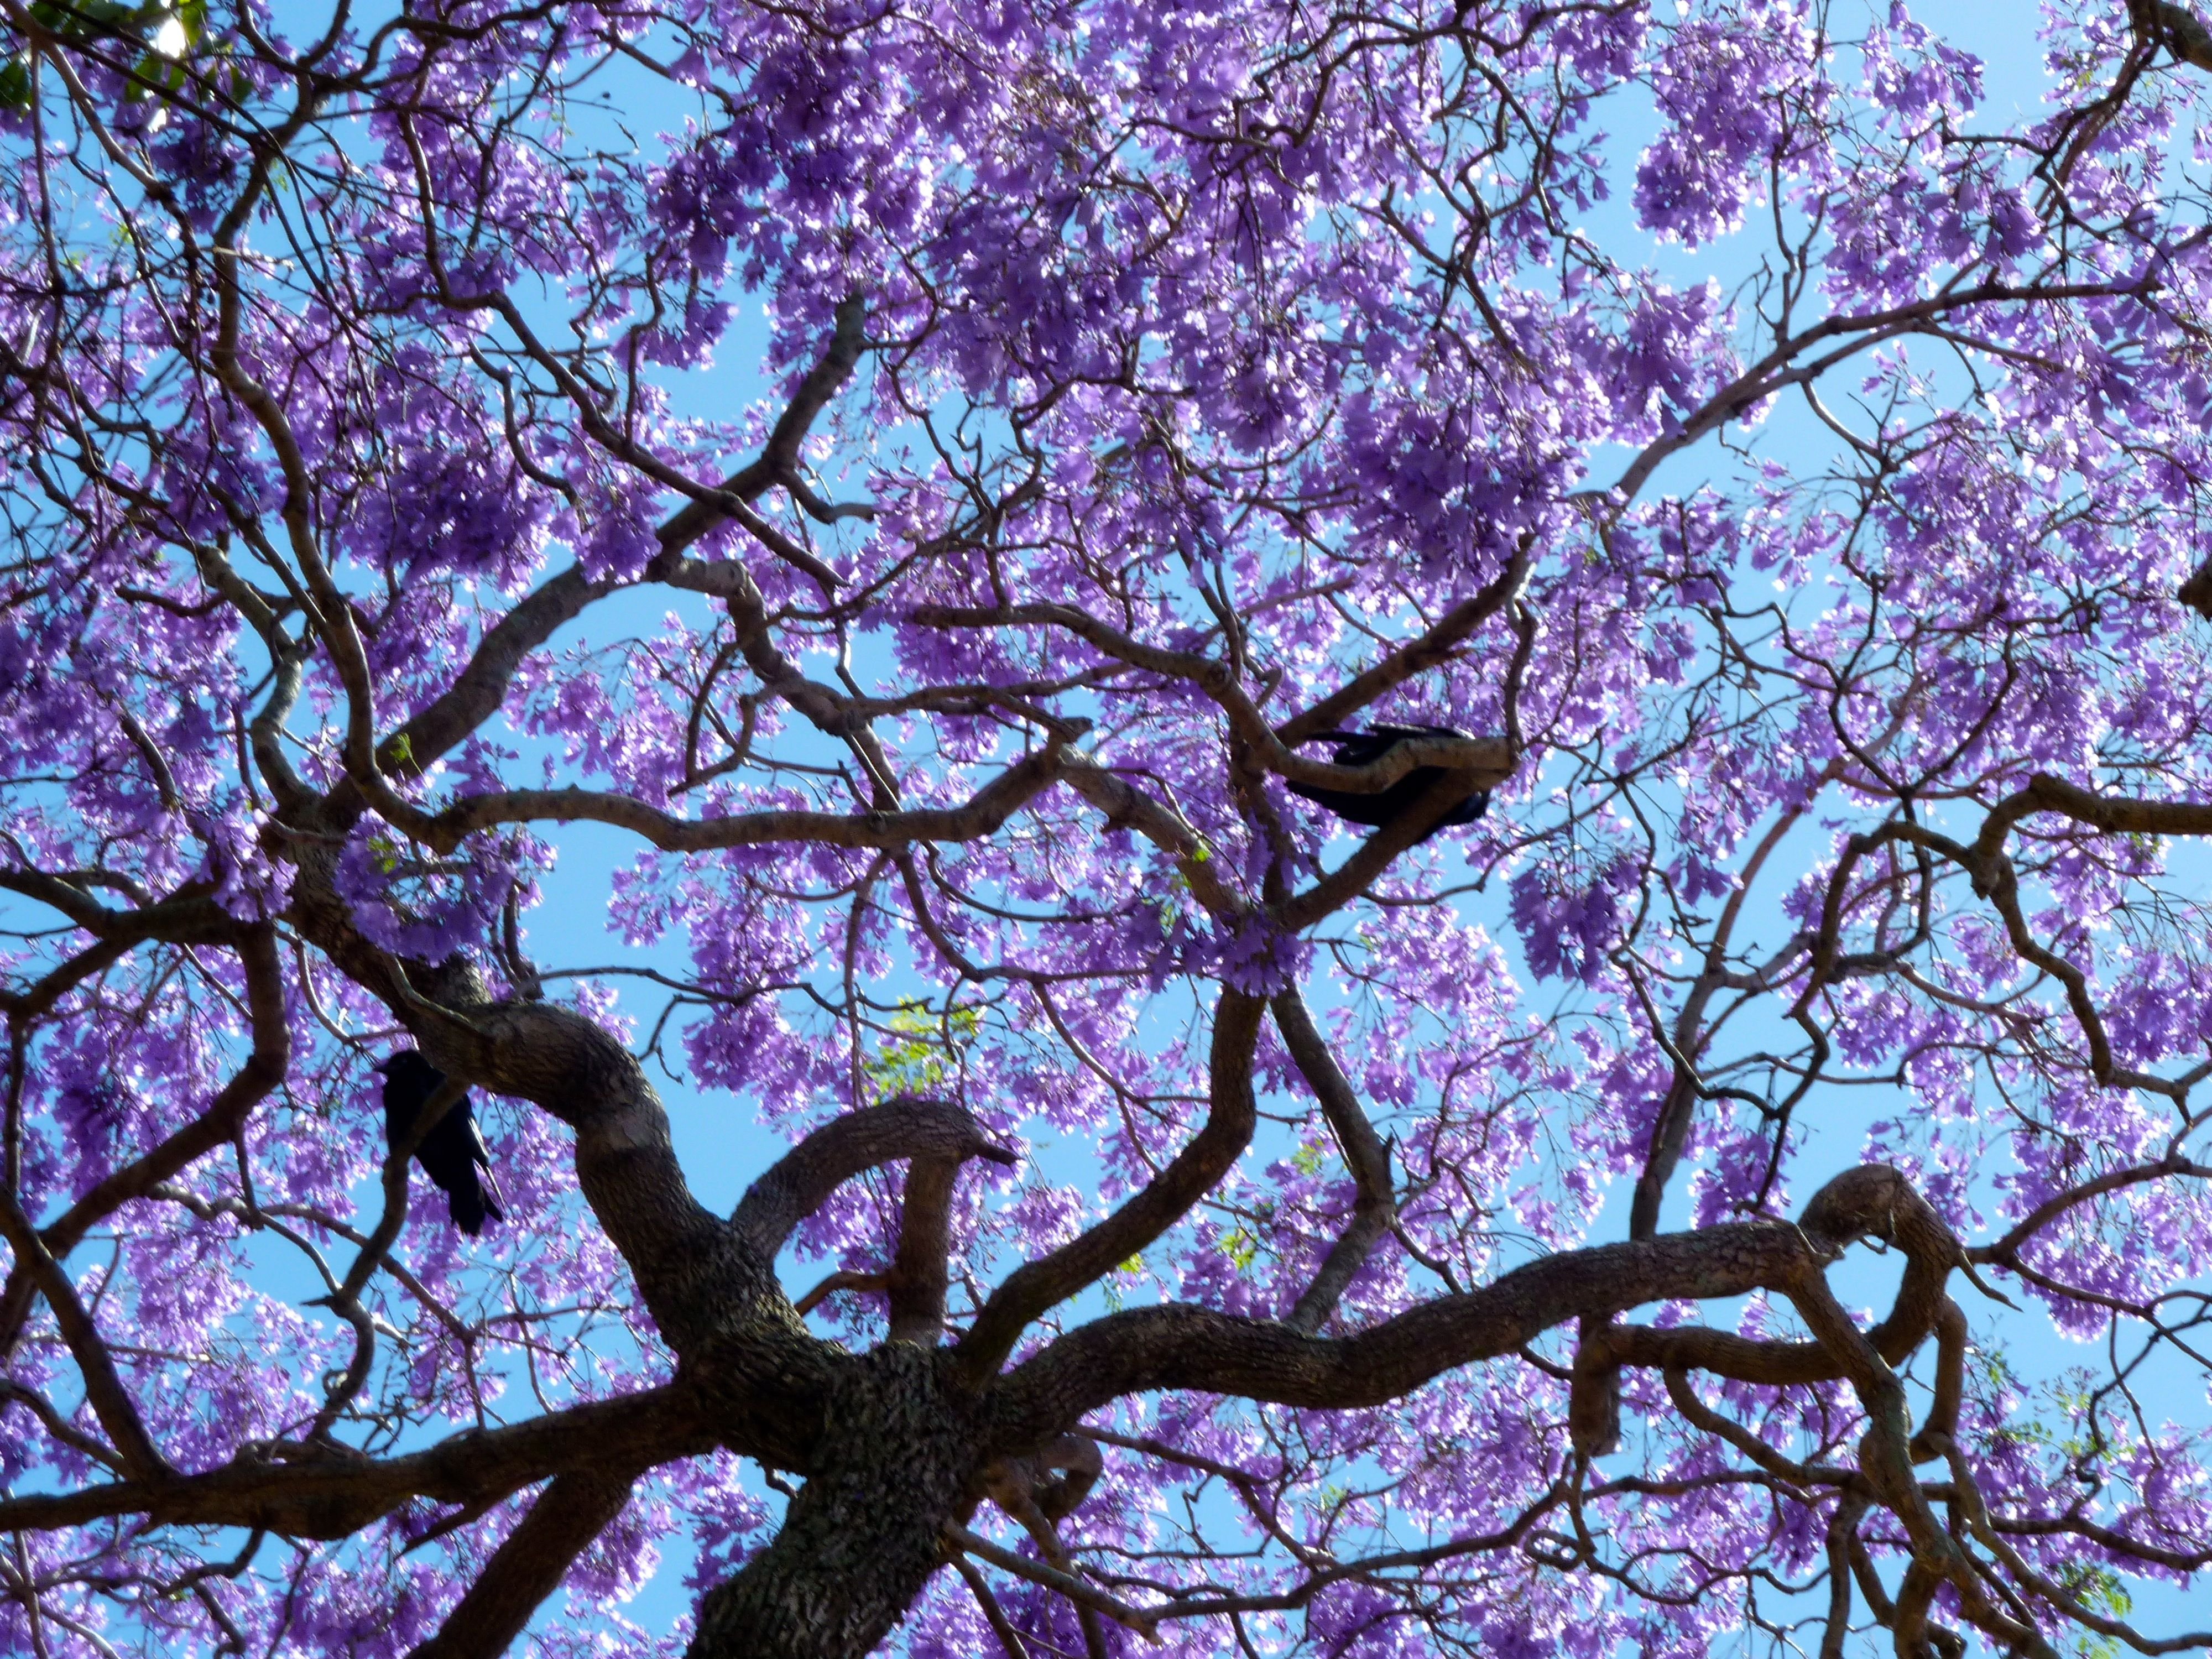 Цветущее дерево без листьев. Жакаранда дерево. Фиалковое дерево джакаранда. Джакаранда фиолетовое дерево. Сиреневая жакаранда.